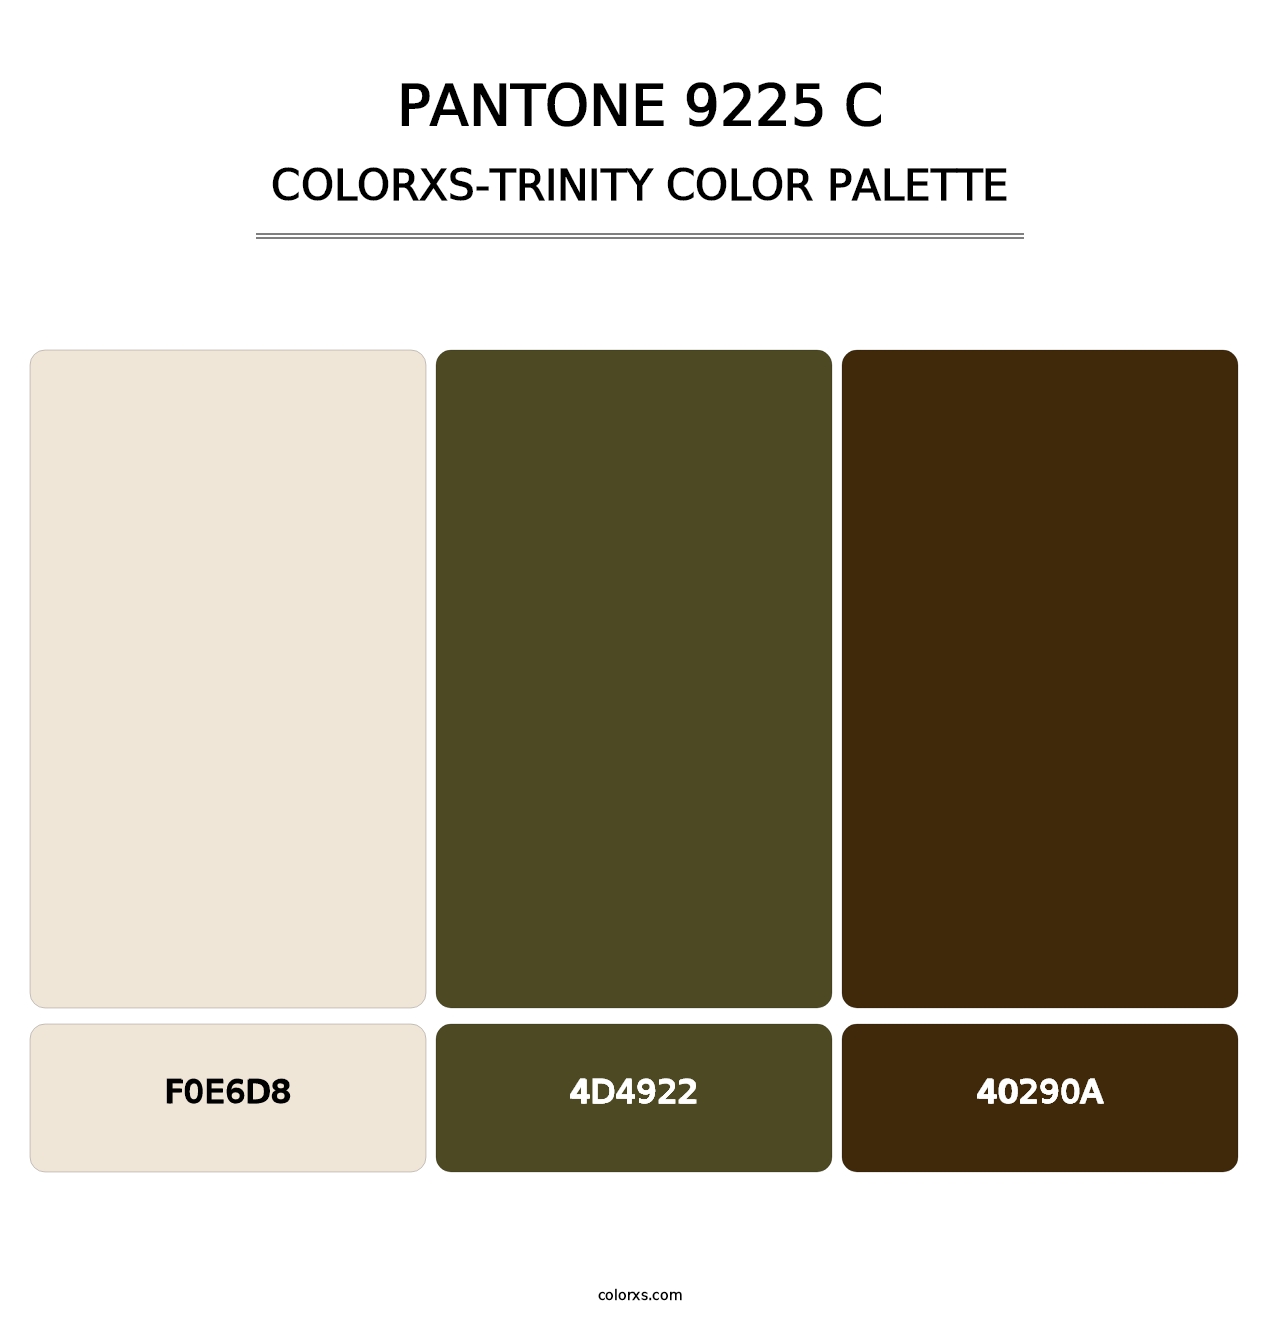 PANTONE 9225 C - Colorxs Trinity Palette